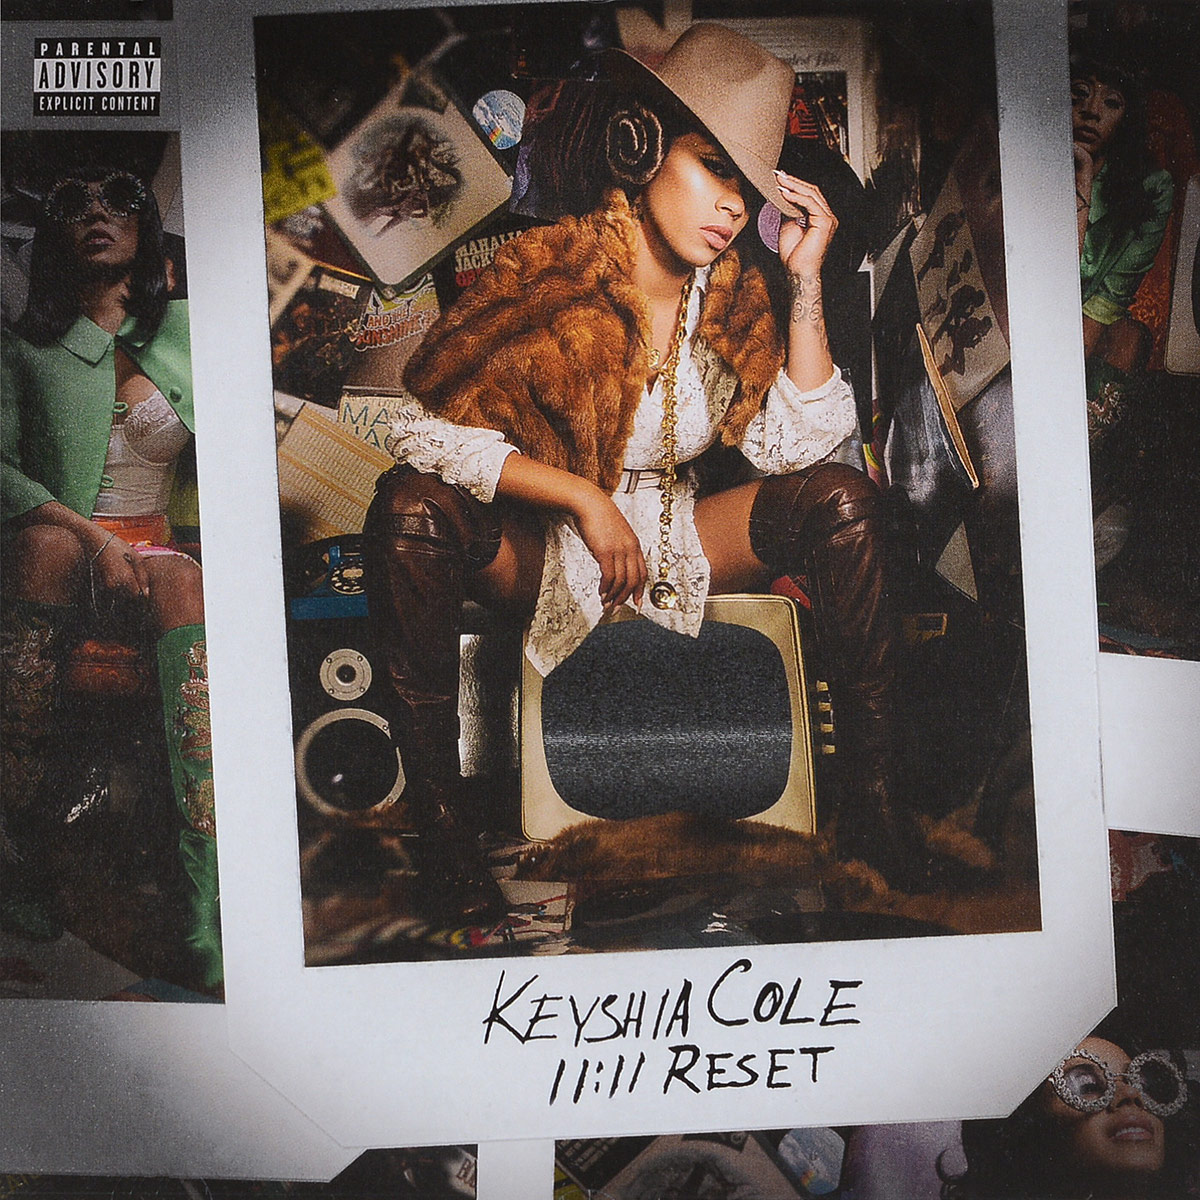 Keyshia Cole Caught On Tape